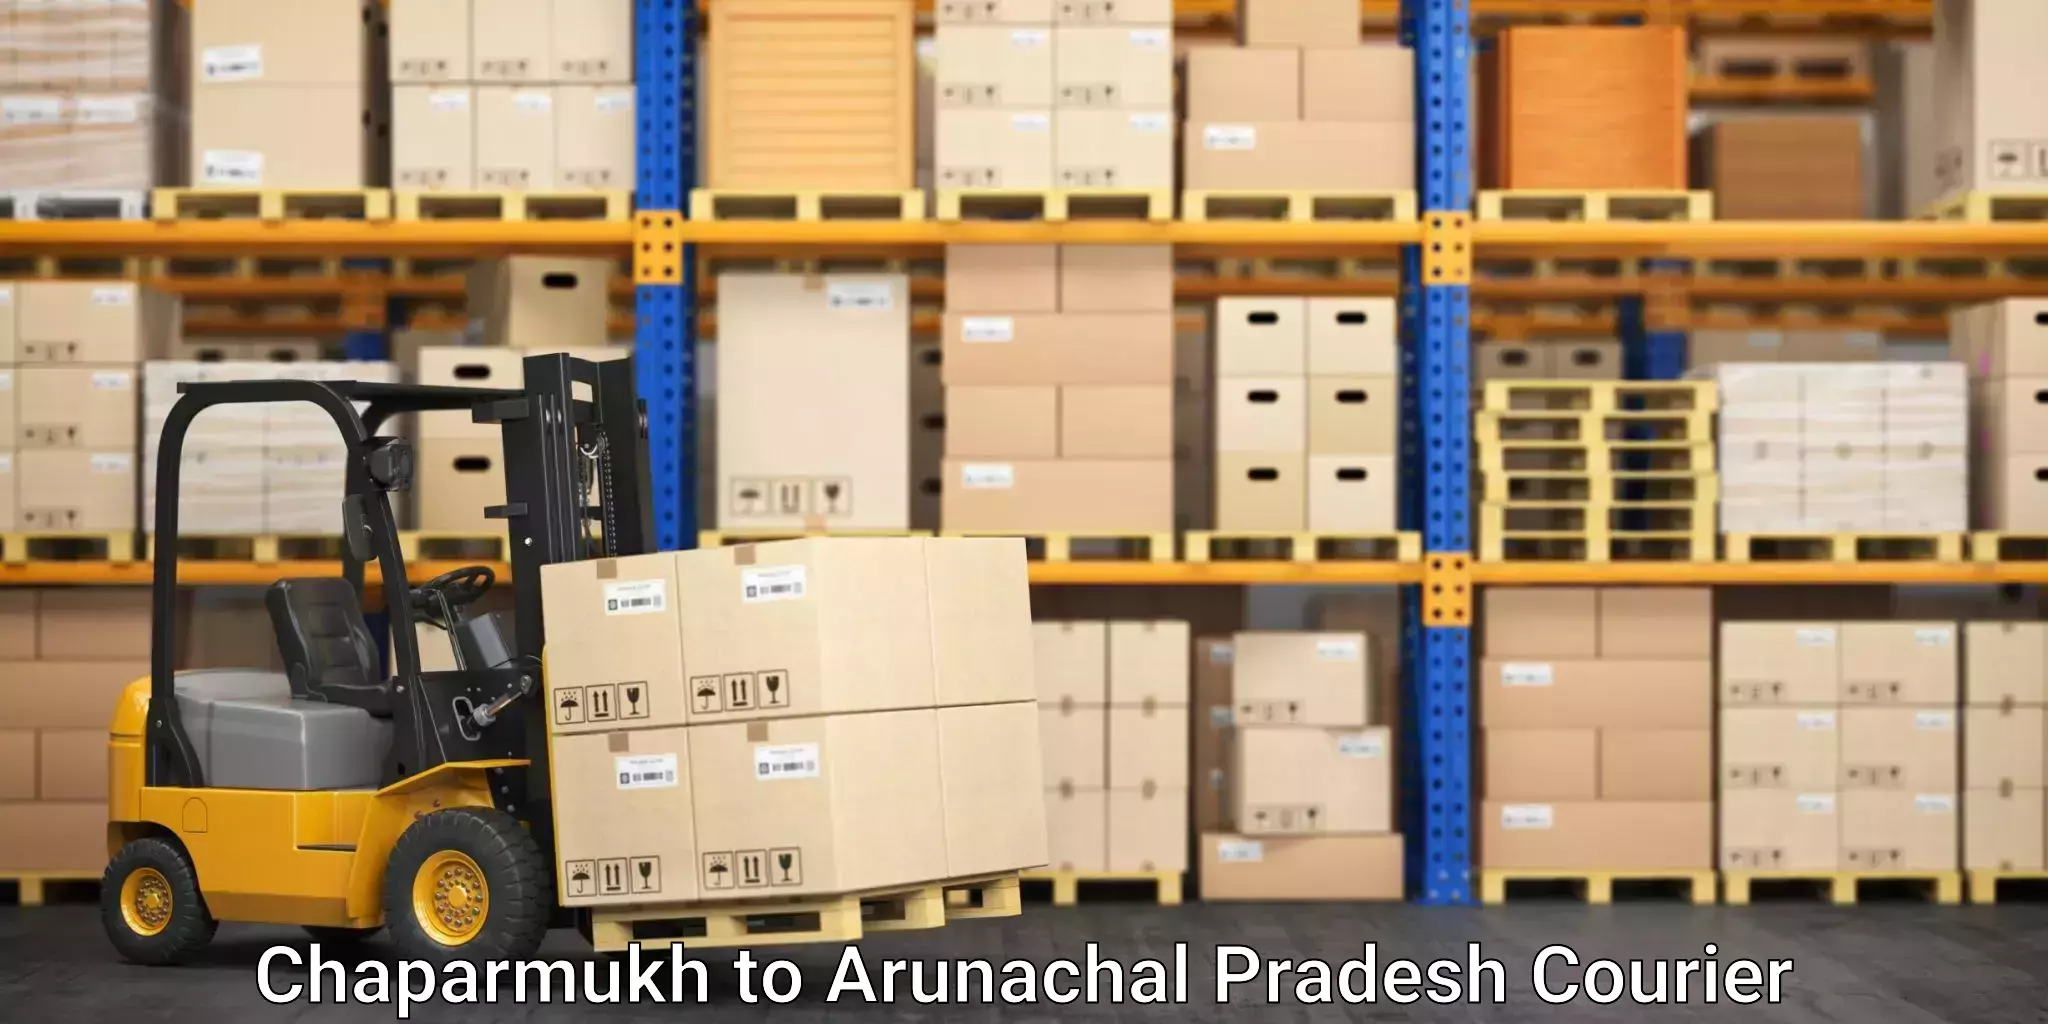 Courier service comparison Chaparmukh to Arunachal Pradesh